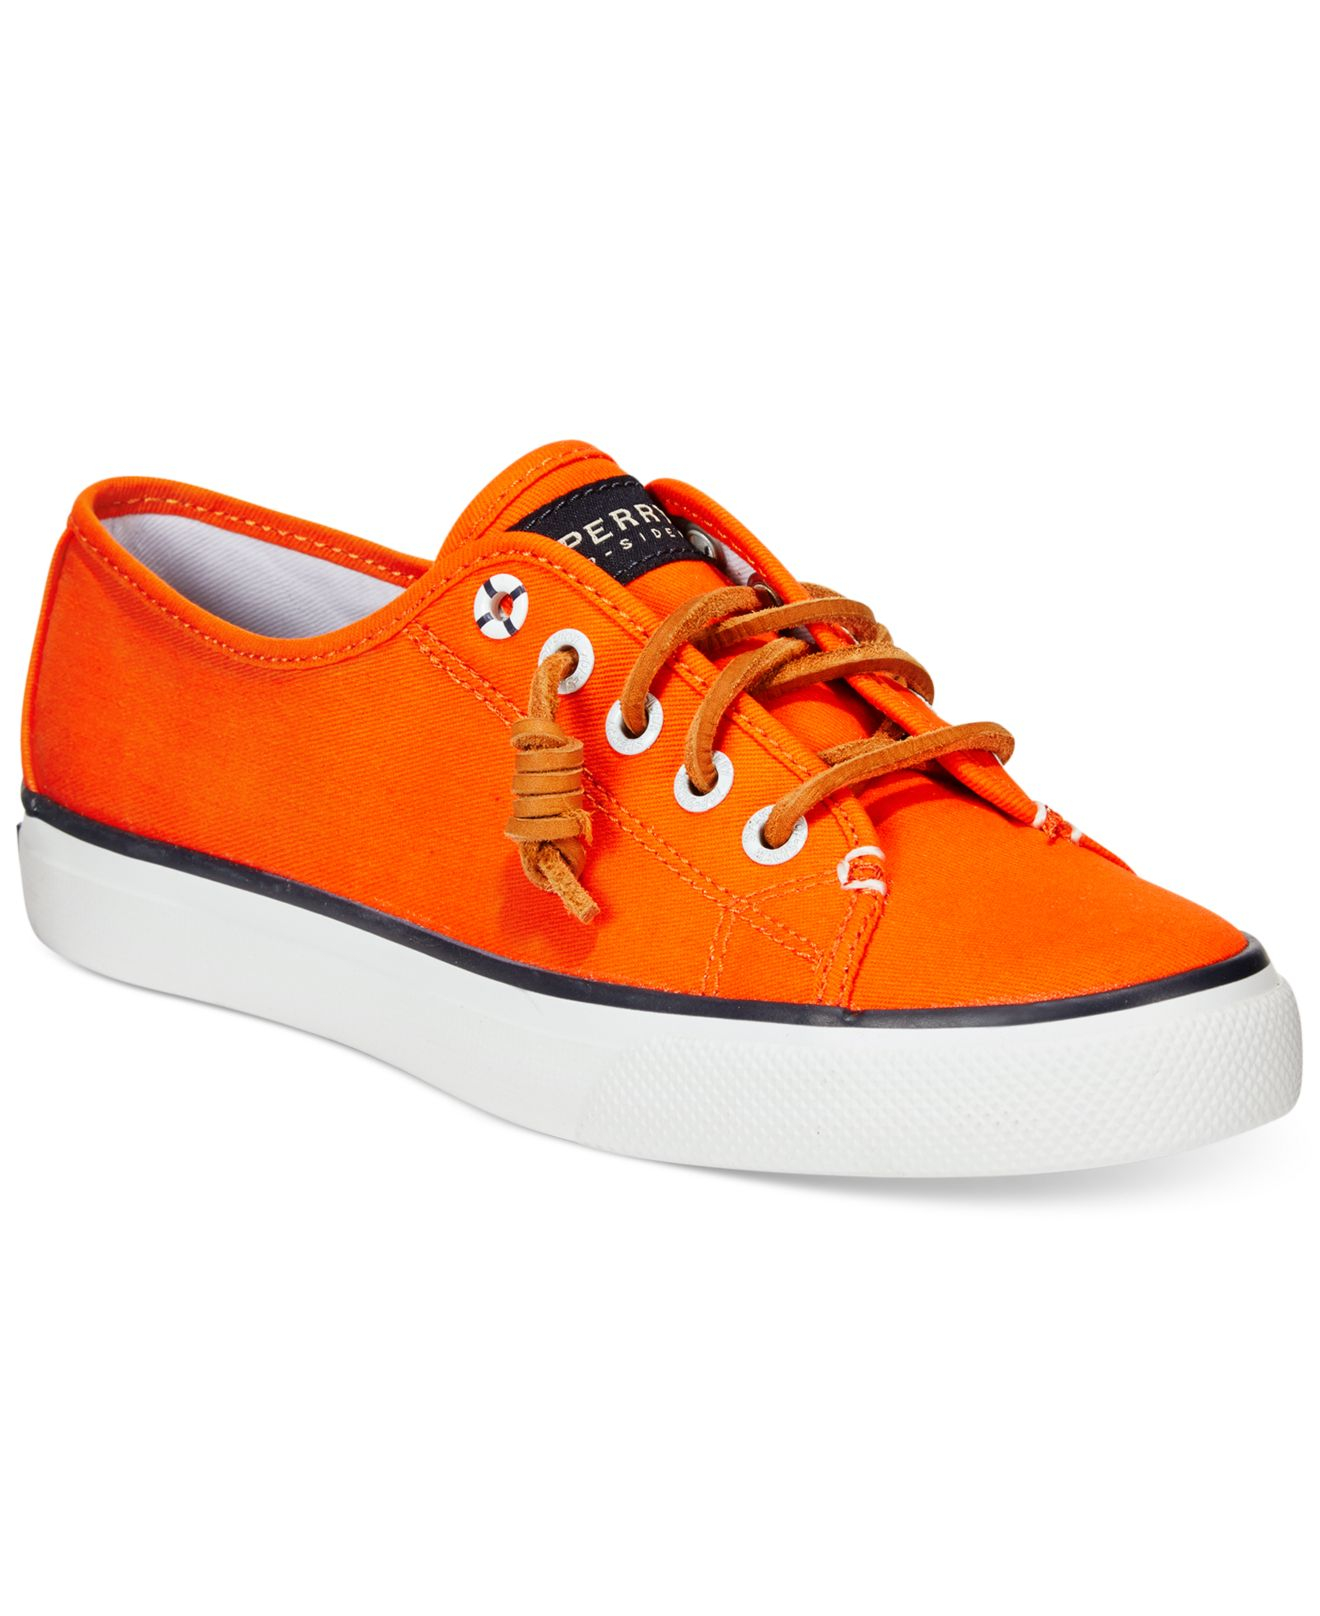 Sperry Top-Sider Women's Seacoast Canvas Sneakers in Orange | Lyst